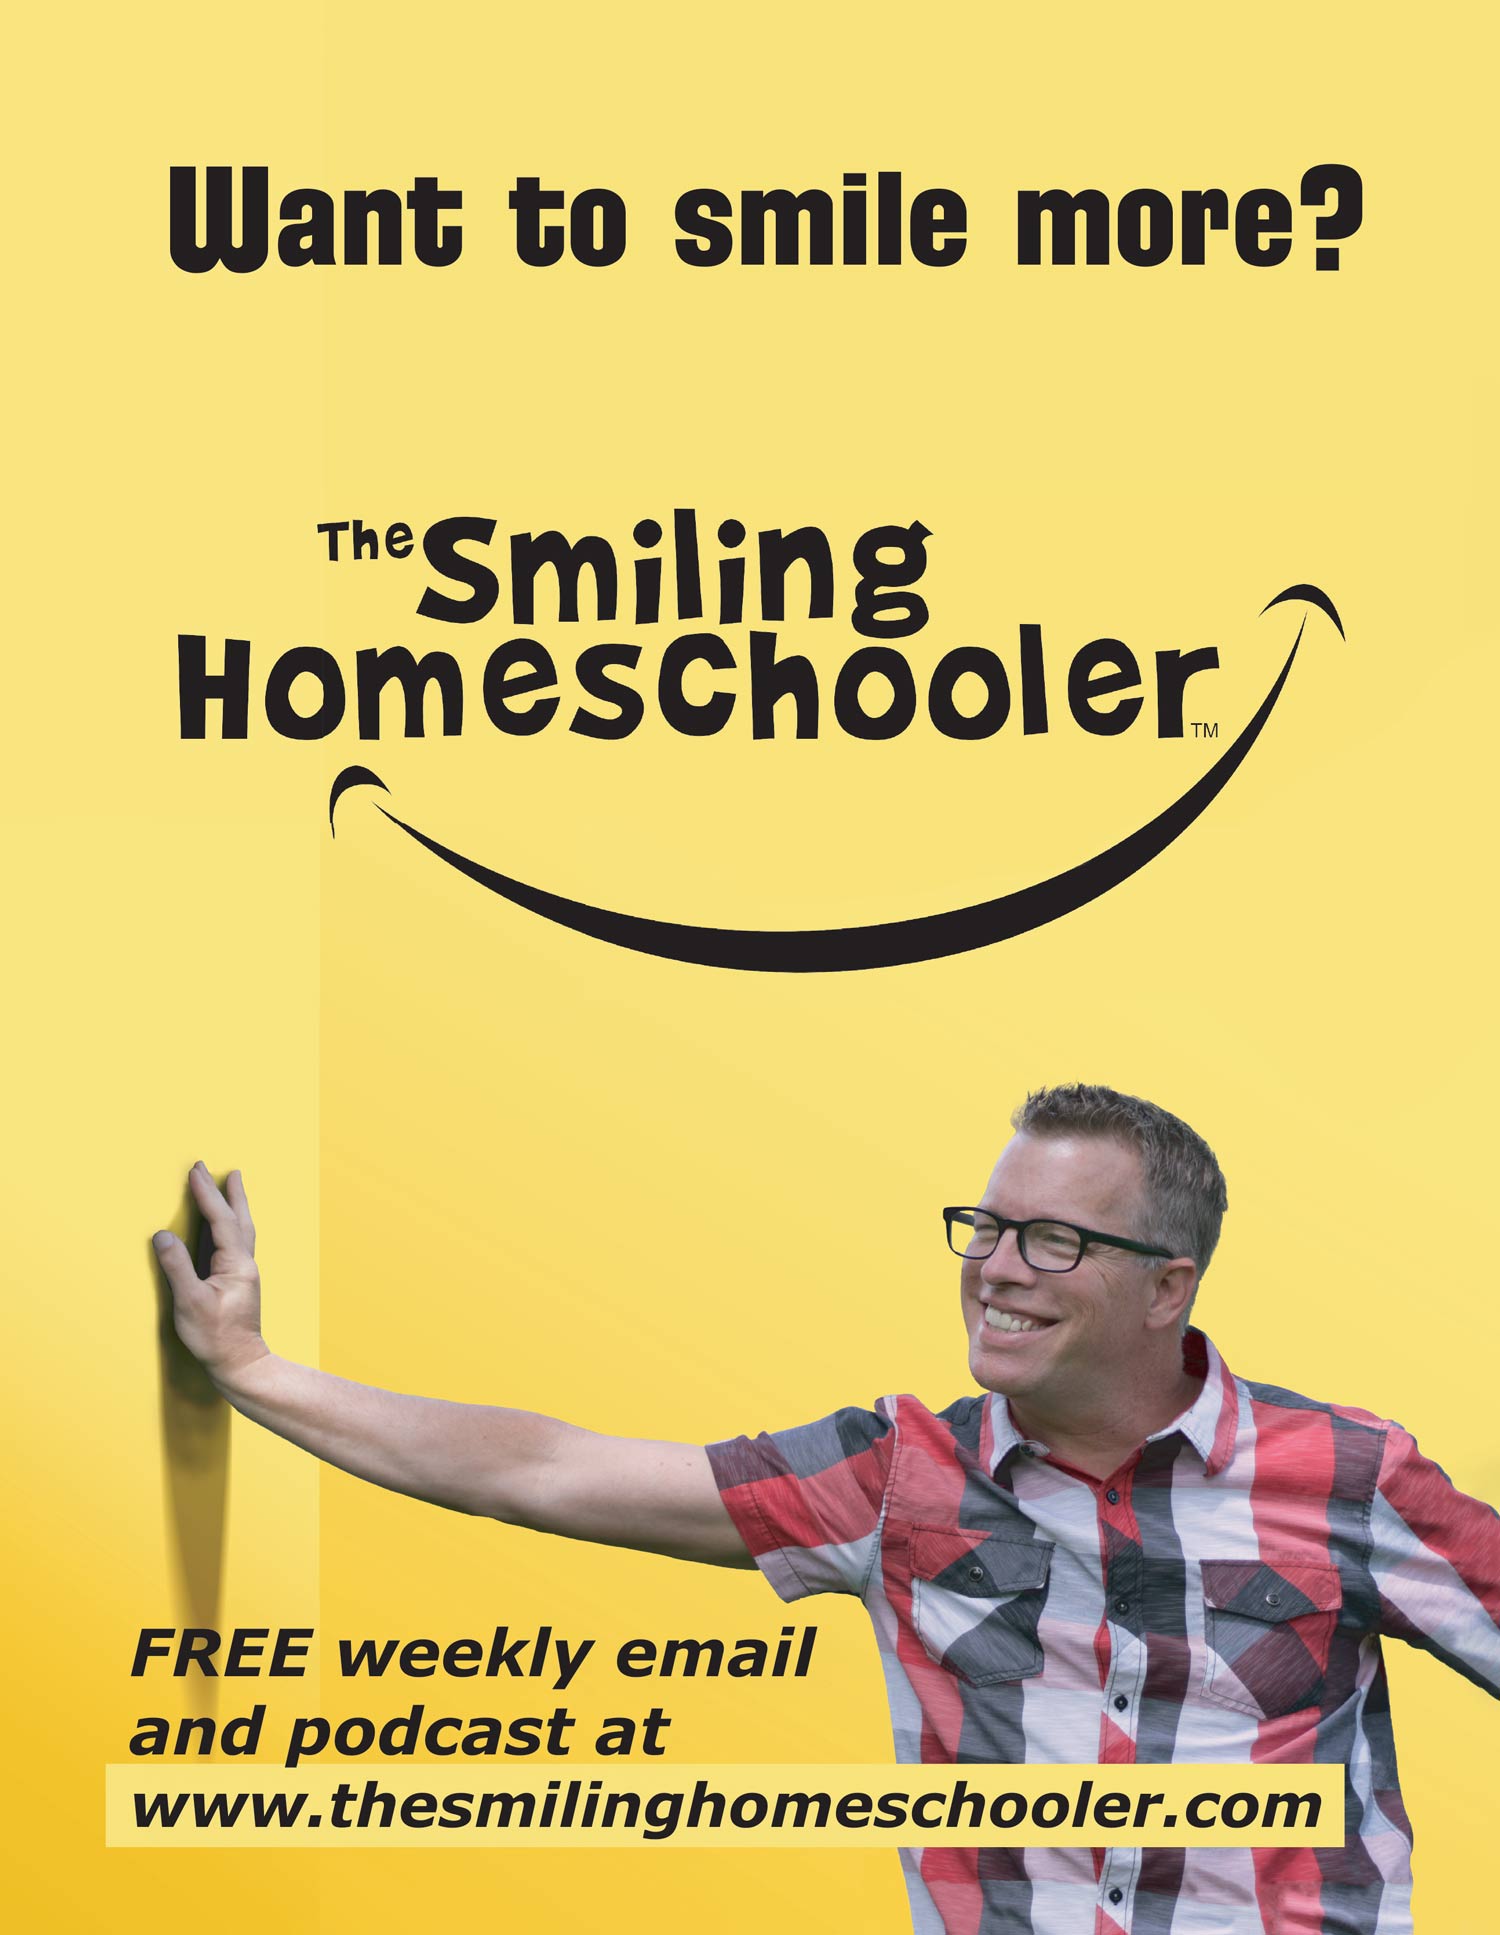 The Smiling Homeschooler podcast Advertisement